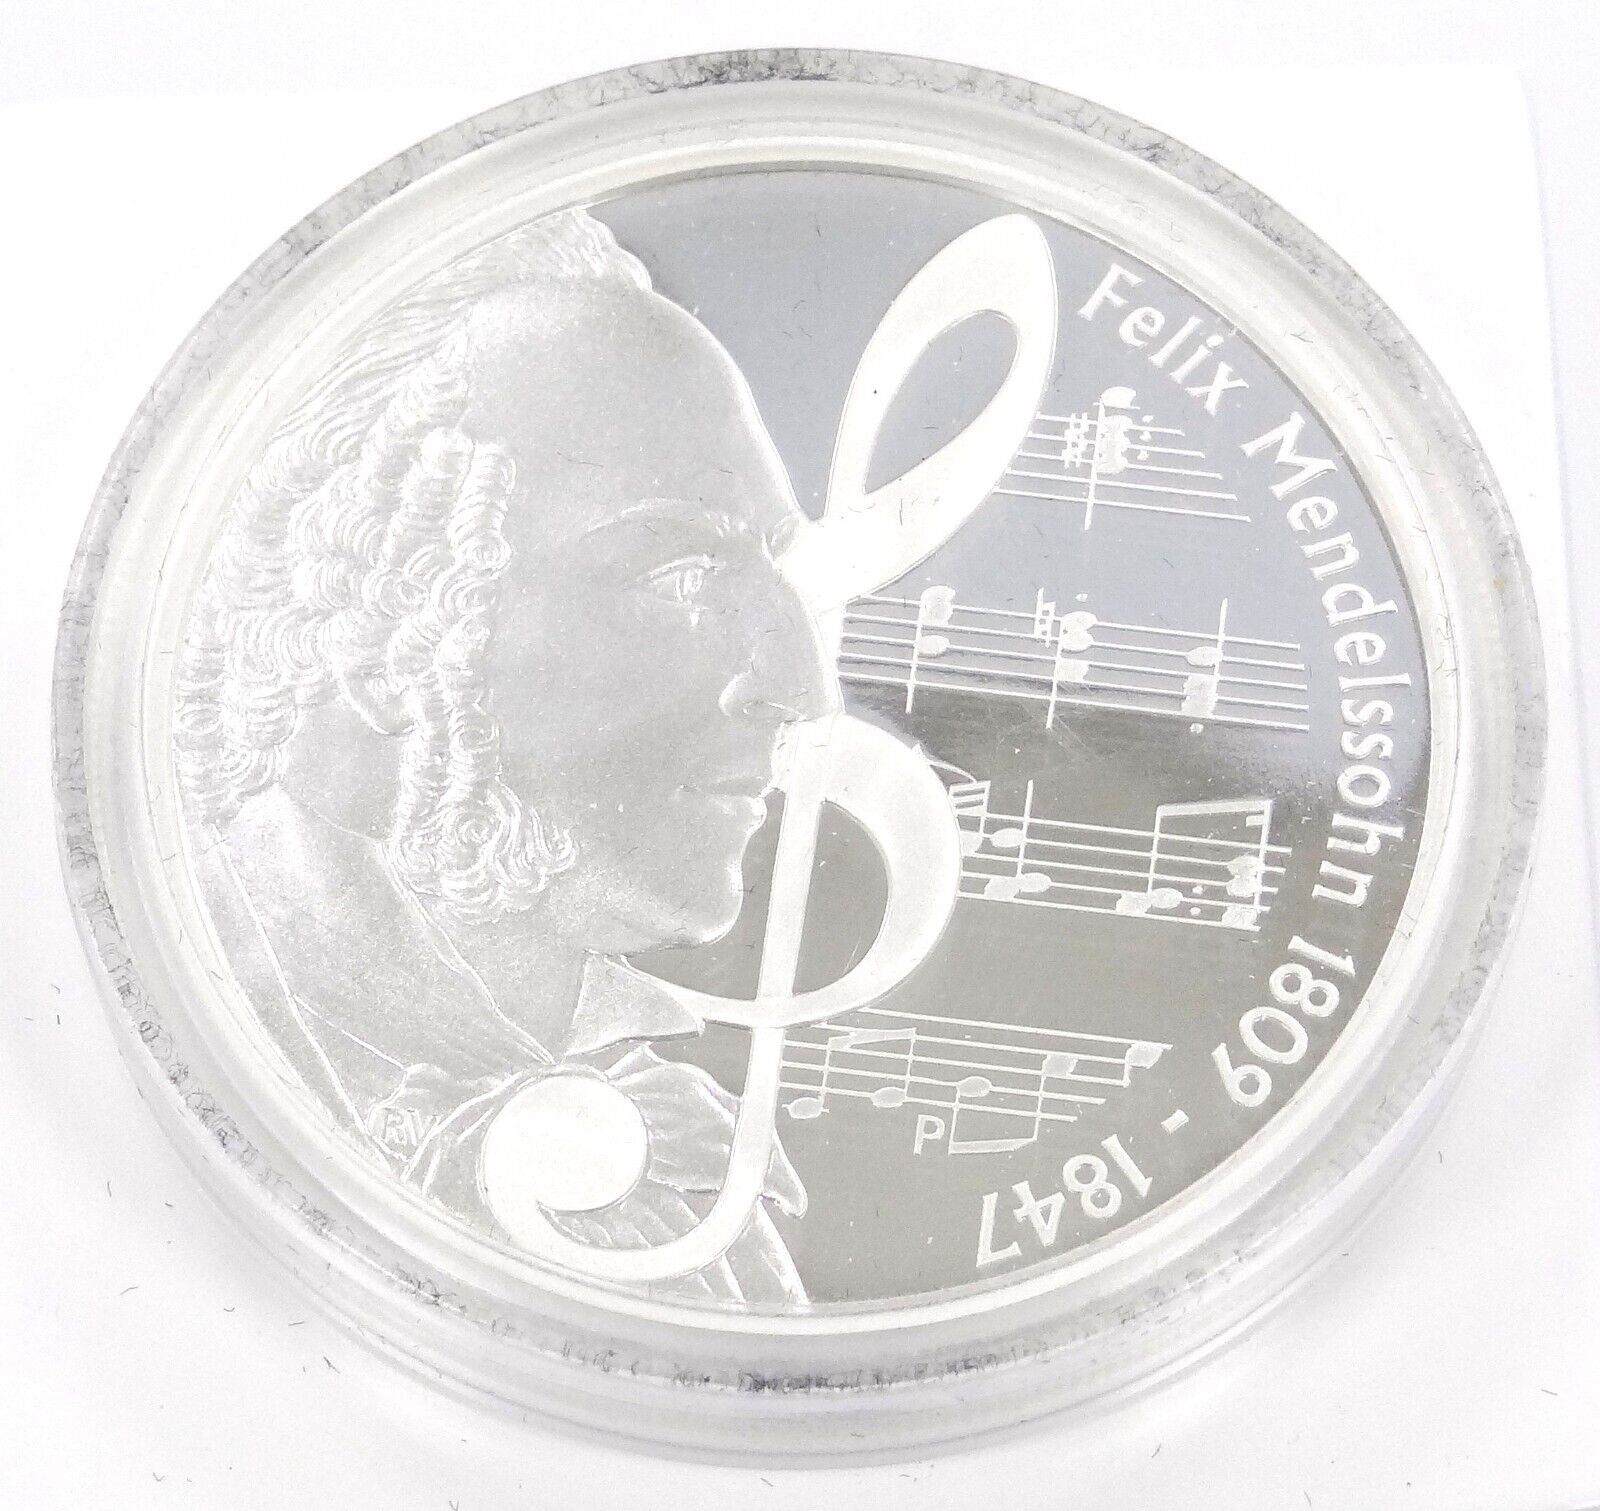 1 Oz Silver Coin 2009 $1 Tuvalu Great Composers Felix Mendelssohn 1809-1847-classypw.com-1